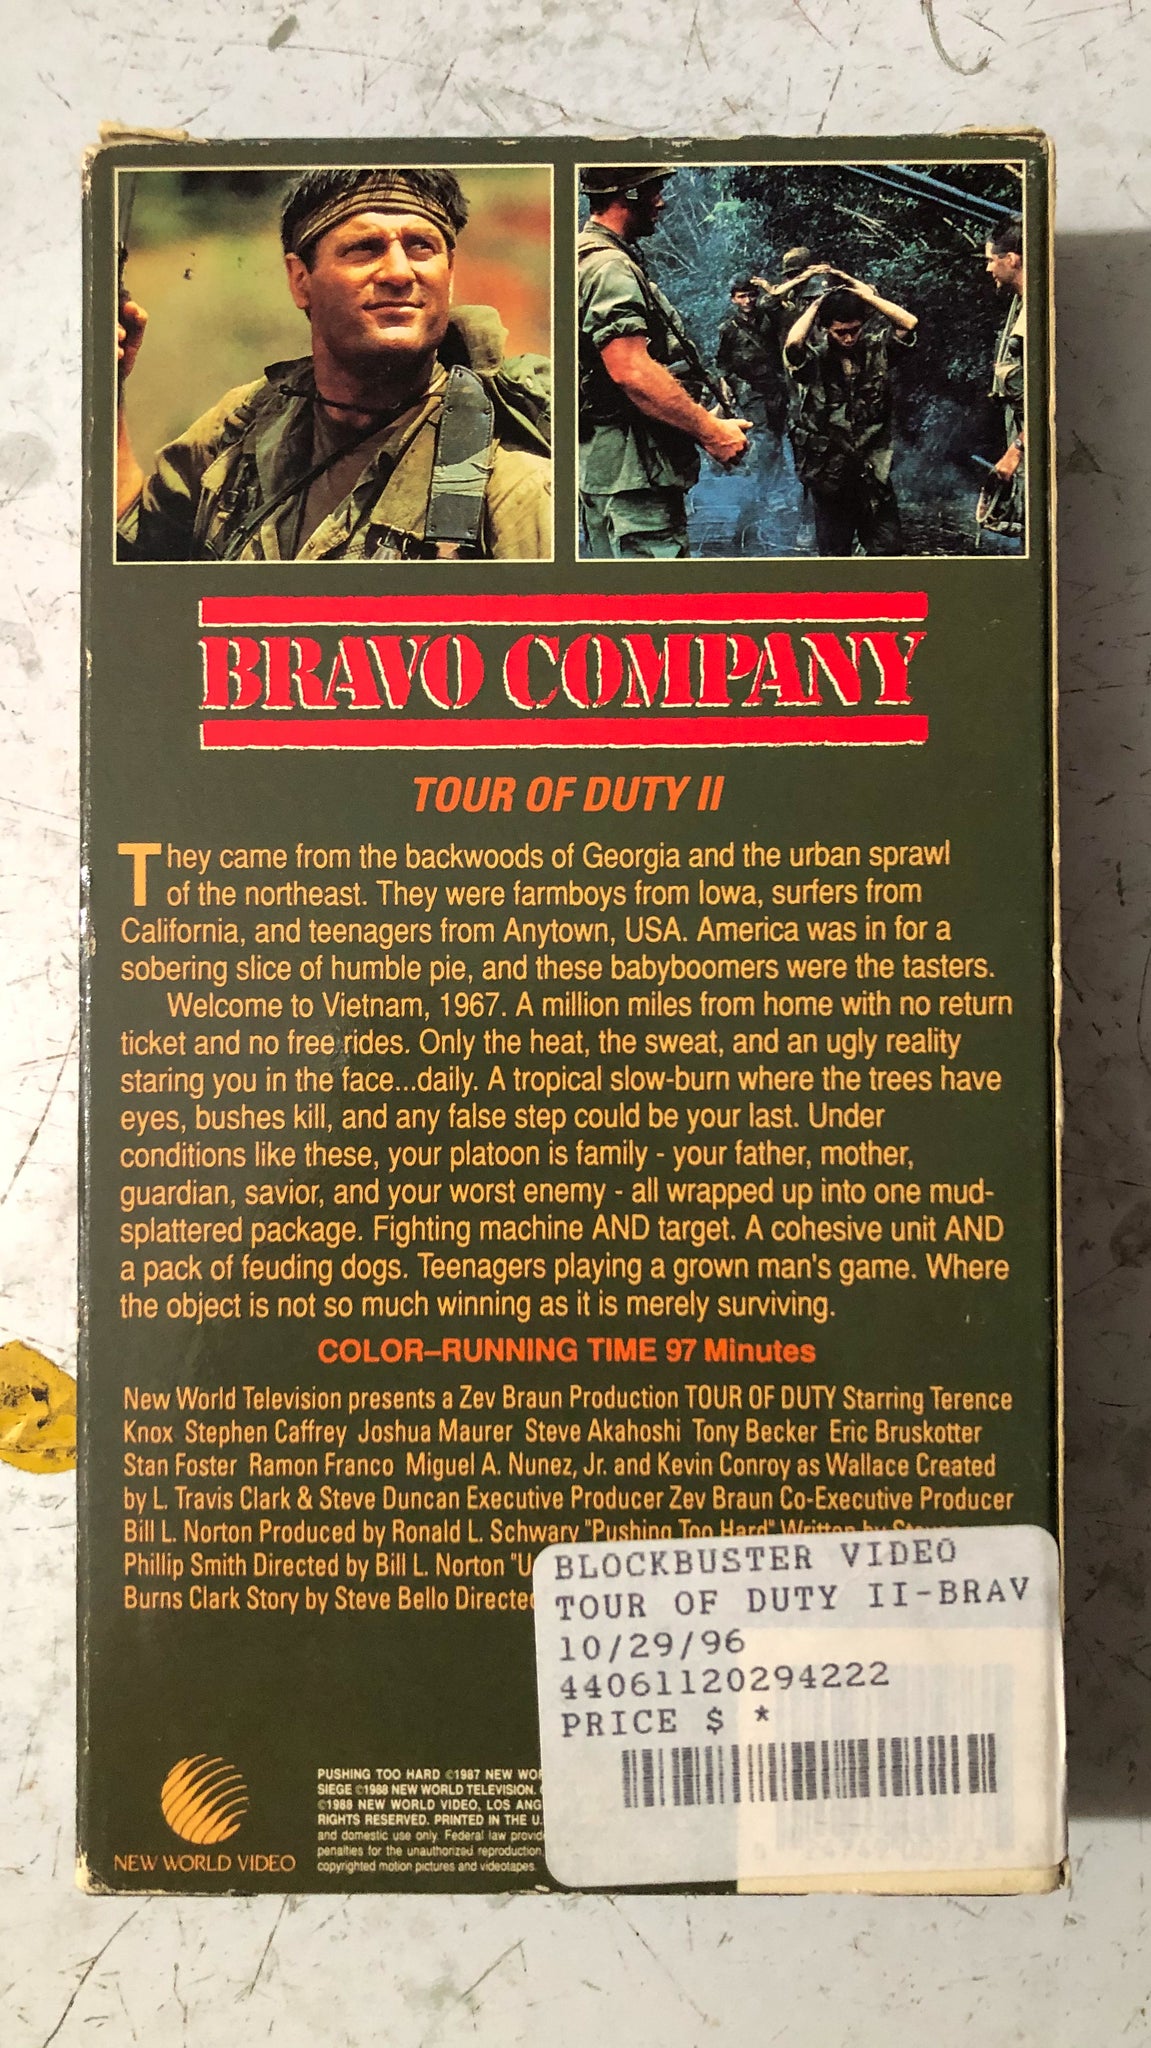 Tour of Duty II: Bravo Company